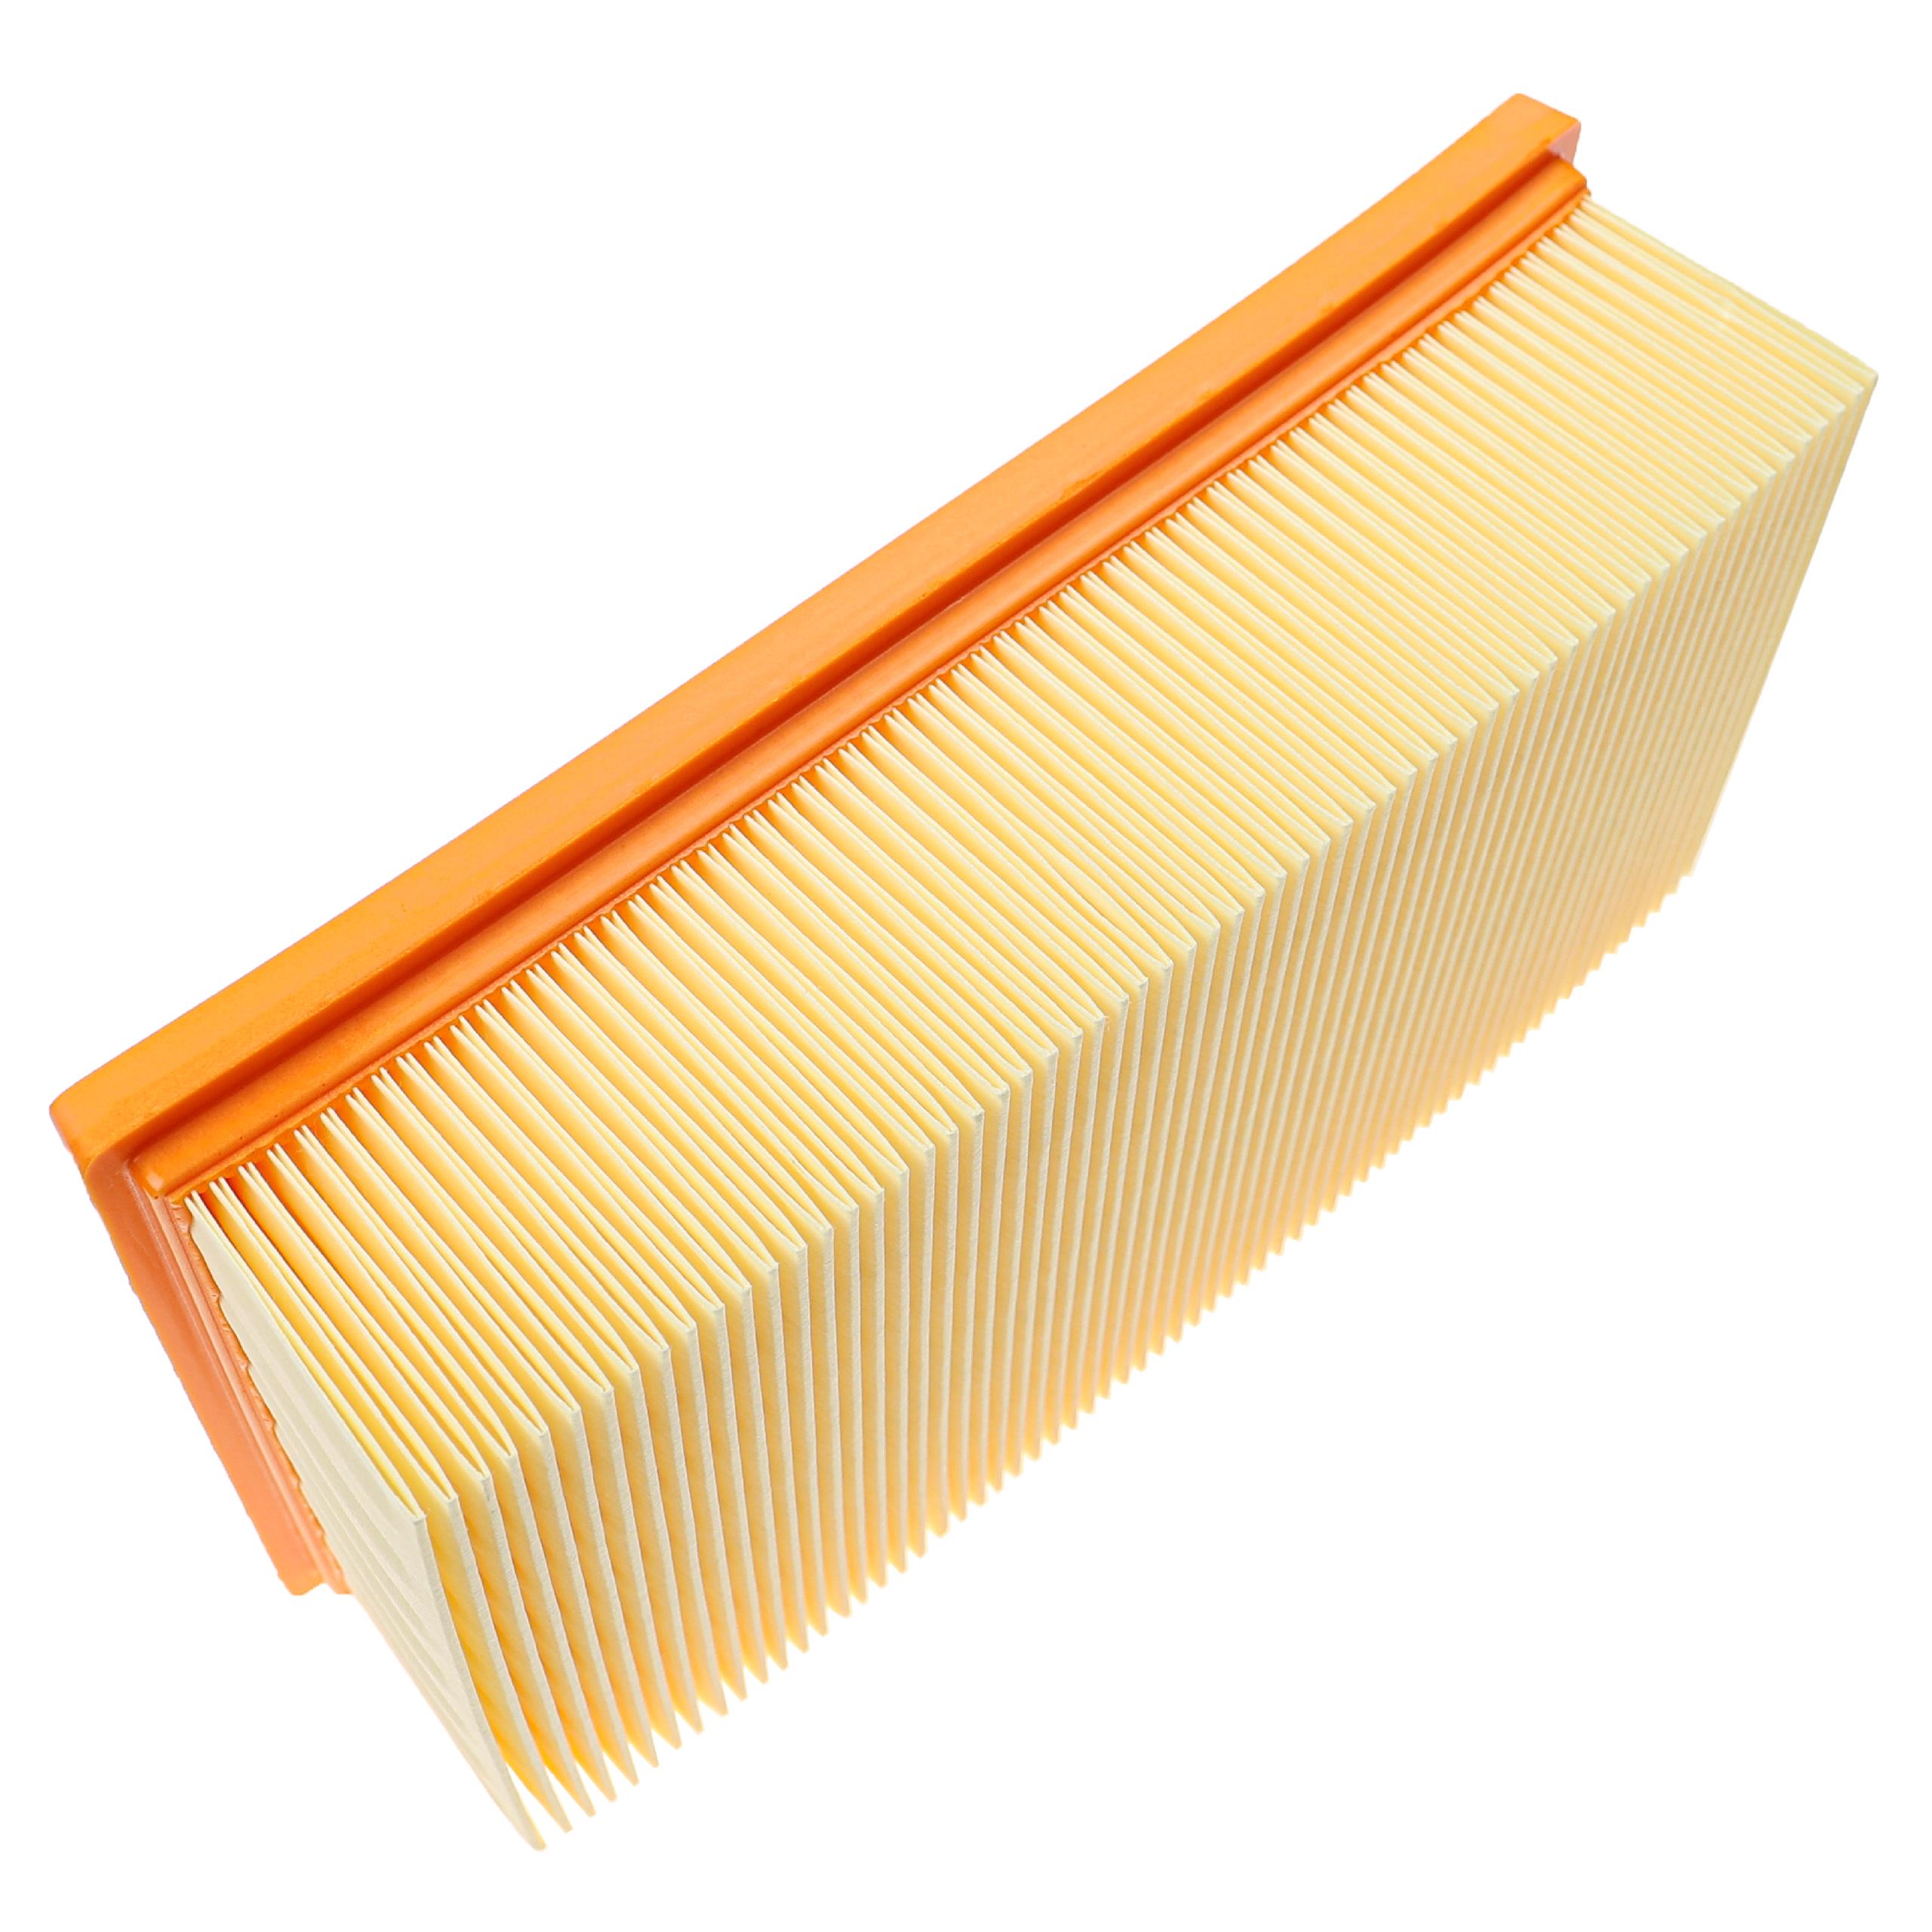 1x flat pleated filter replaces Festool 452065 for FestoolVacuum Cleaner